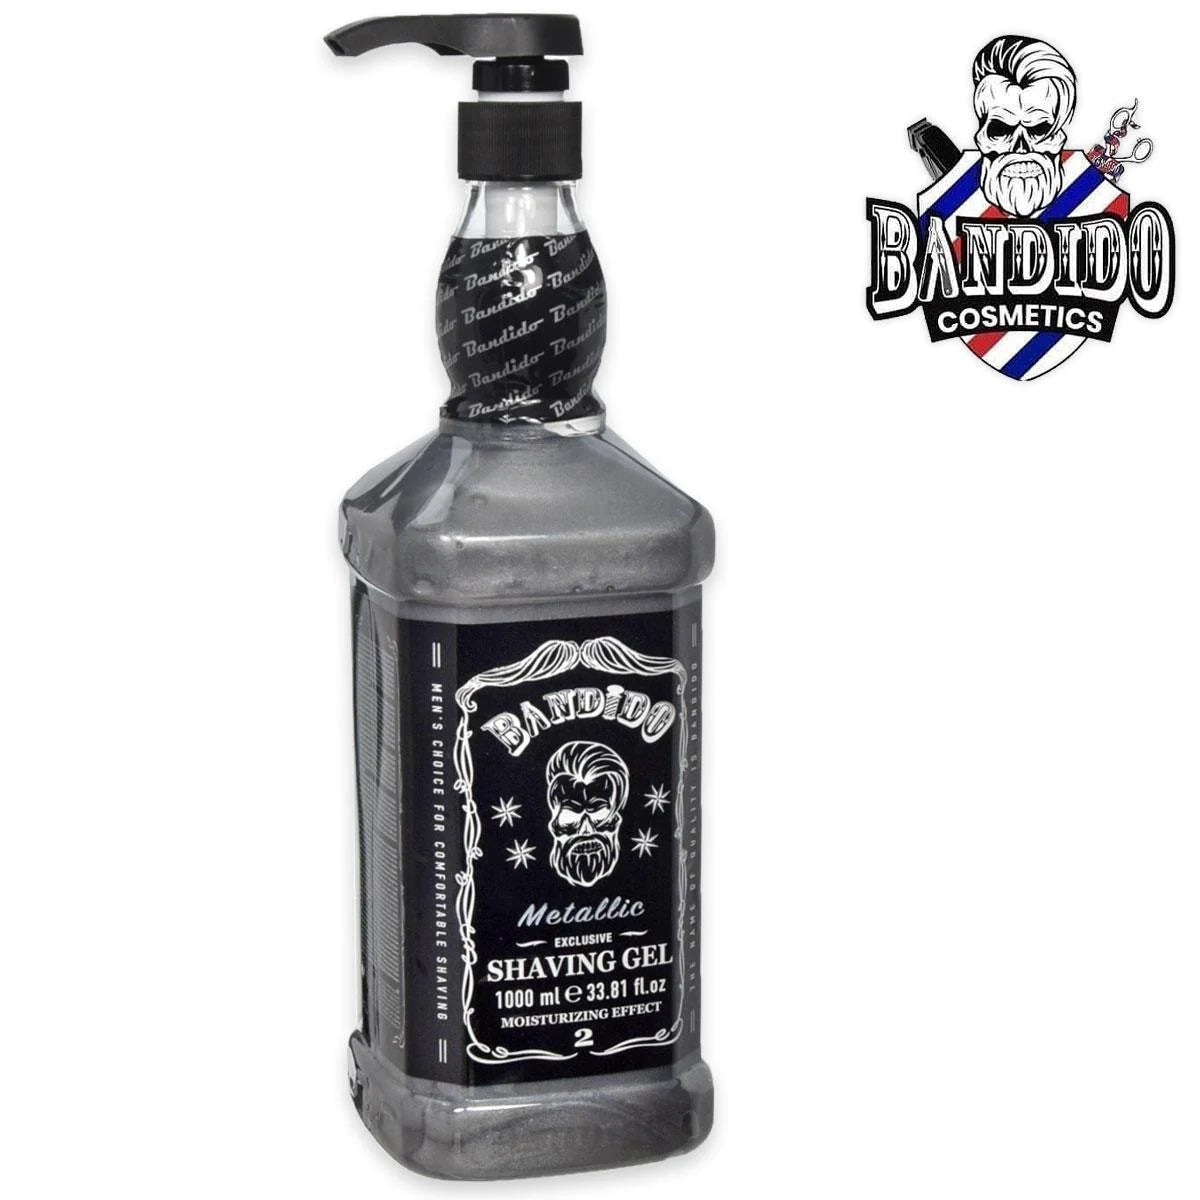 Bandido Shaving gel - Metallic 1000ml